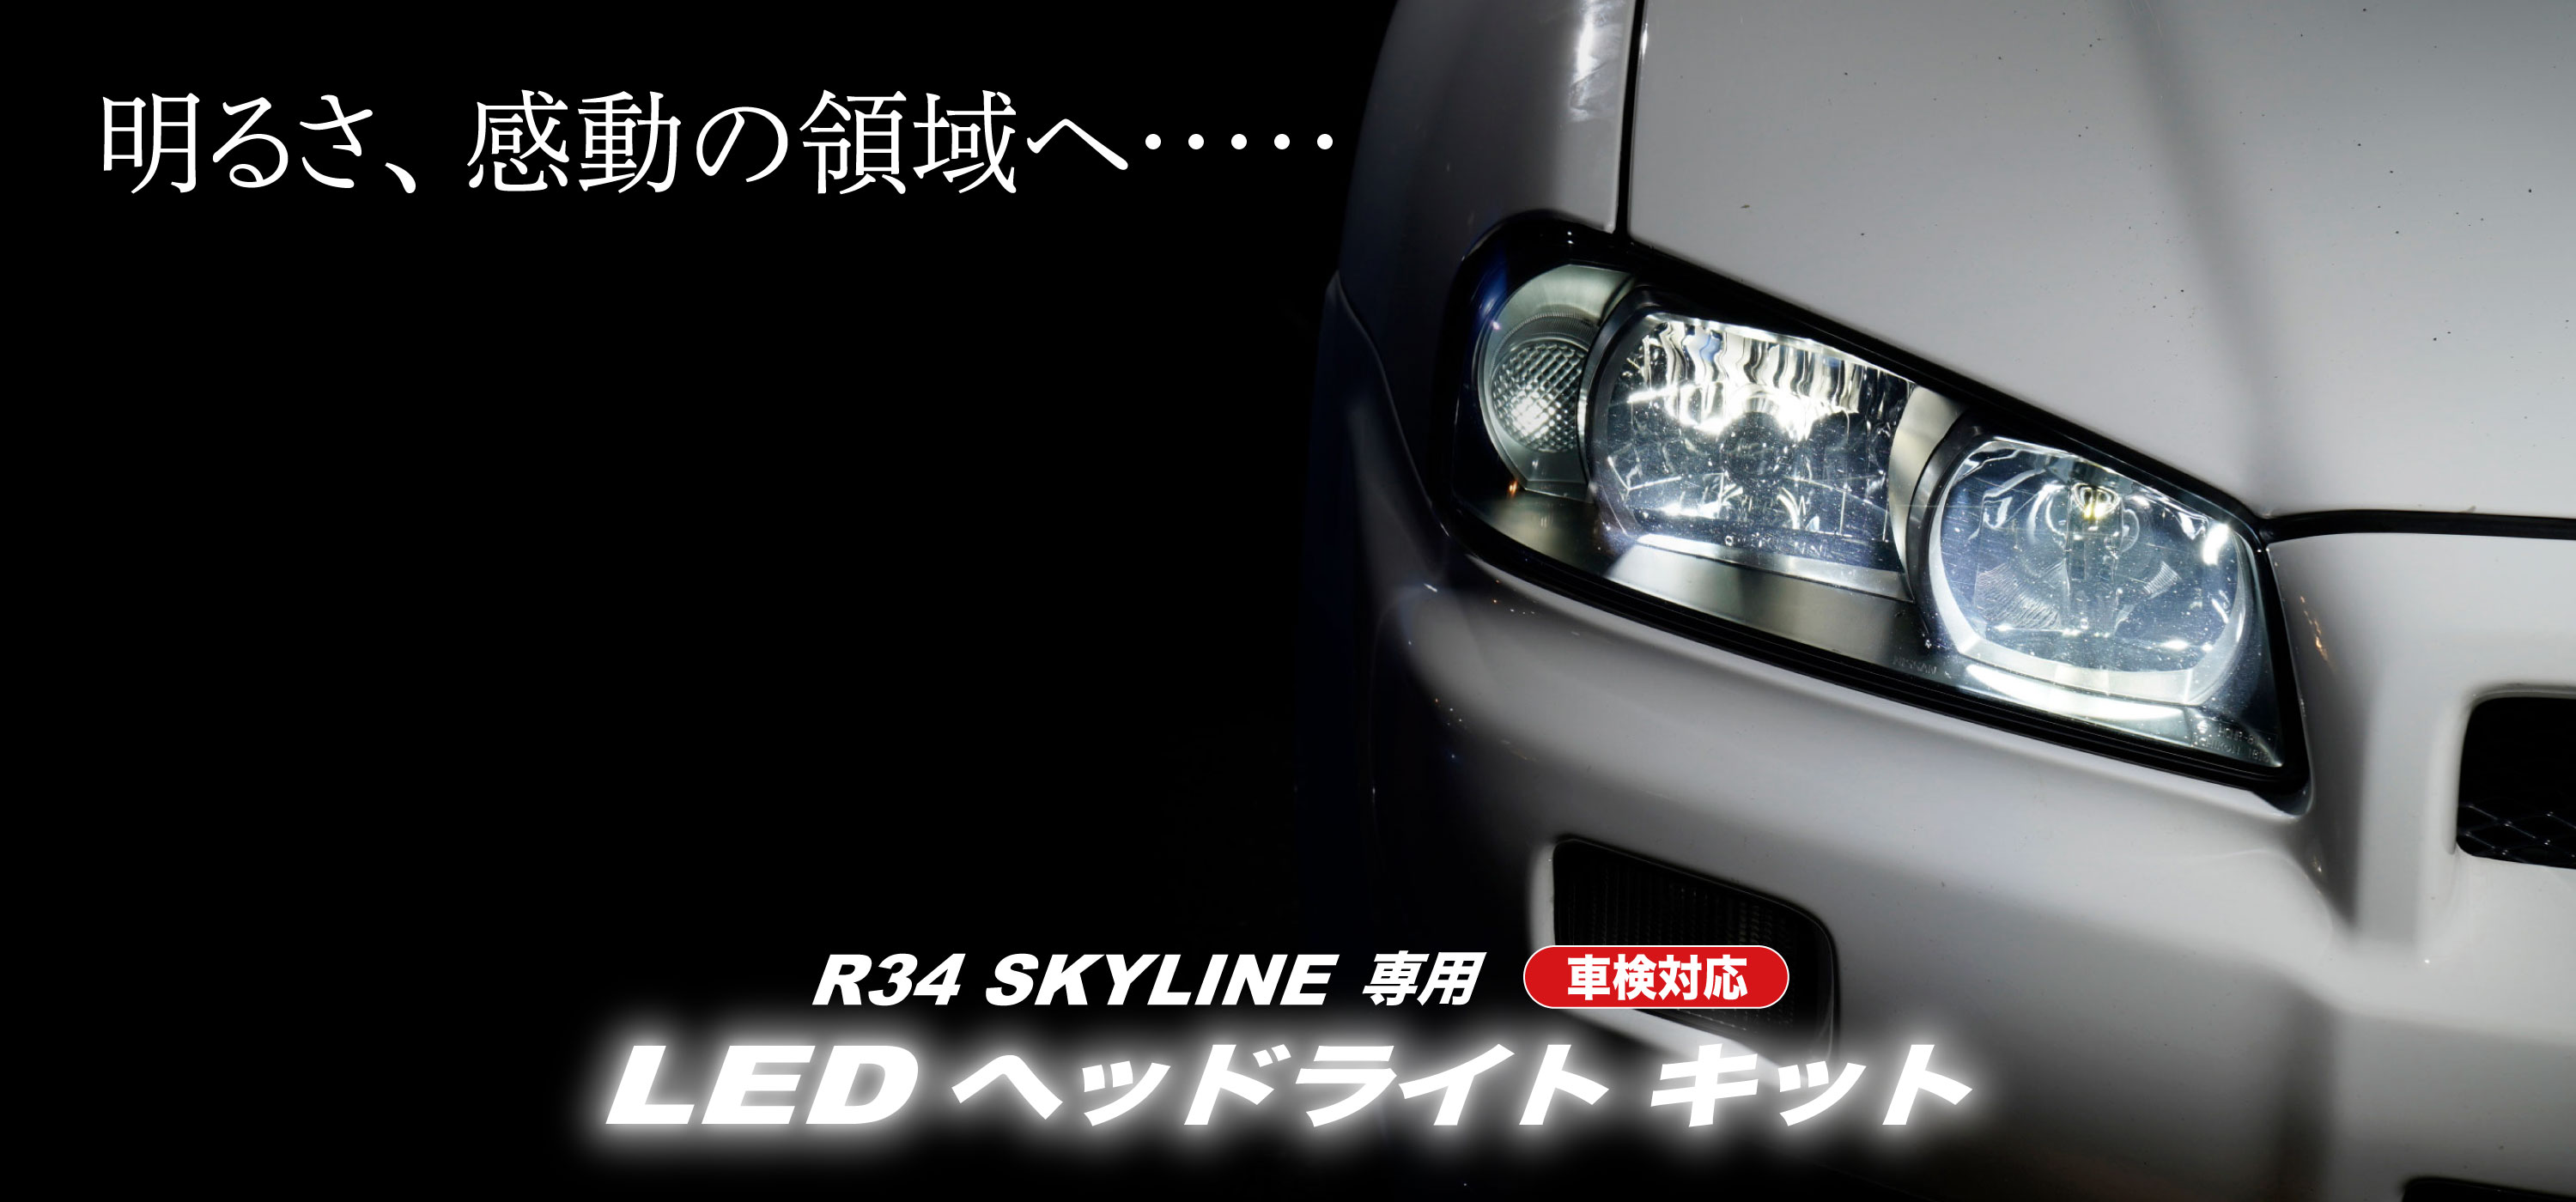 R34 LED Headlight